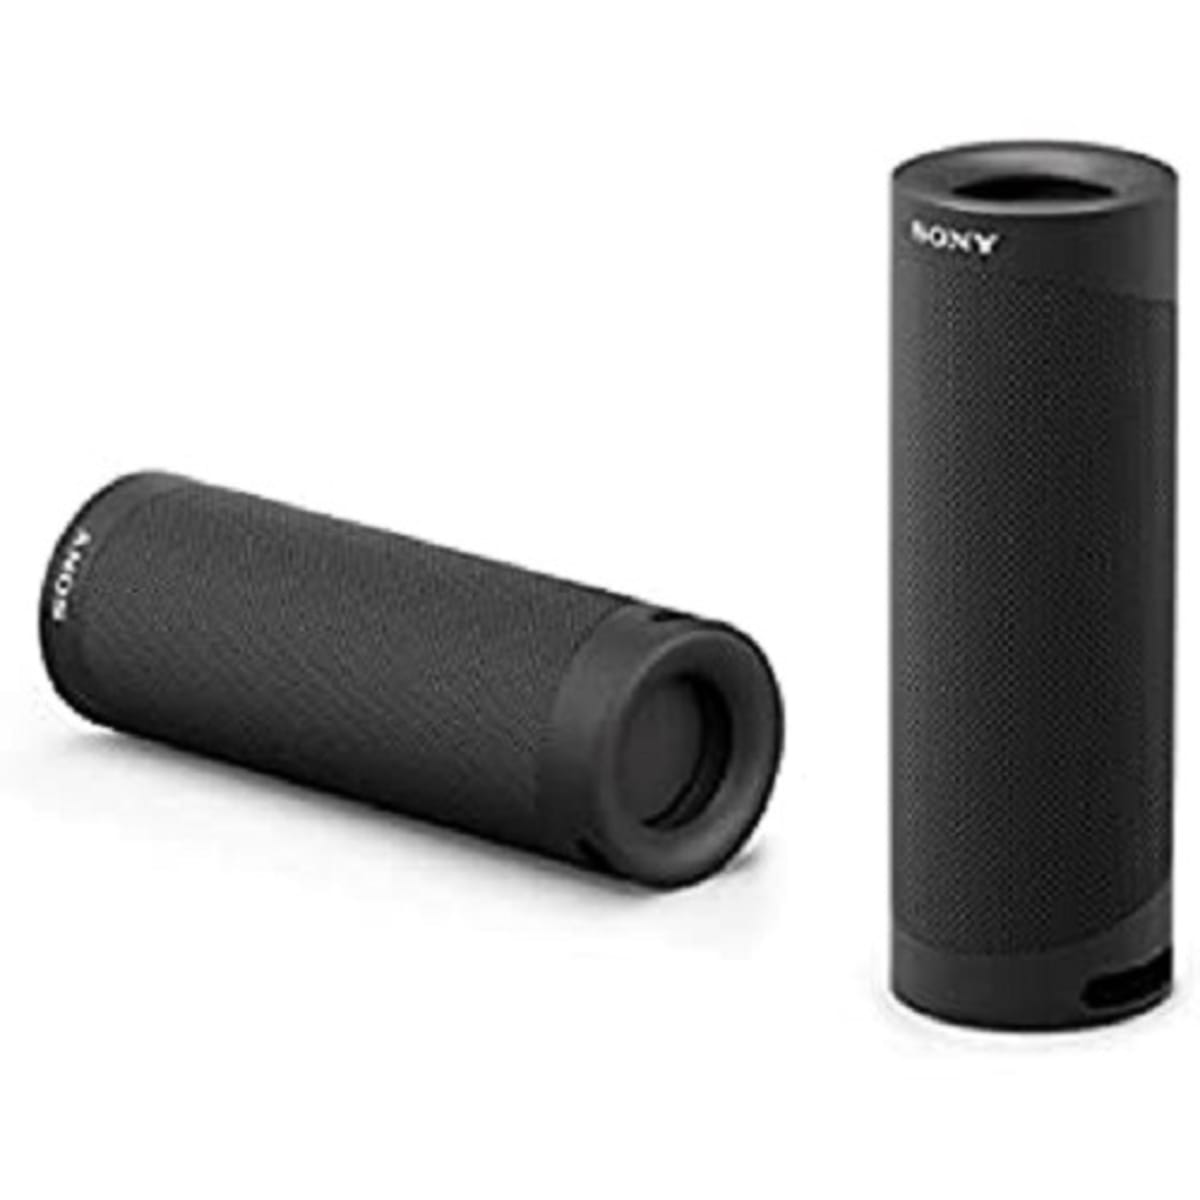 Sony Srs-xb43 Compact Portable Bluetooth Speaker | Konga Online Shopping